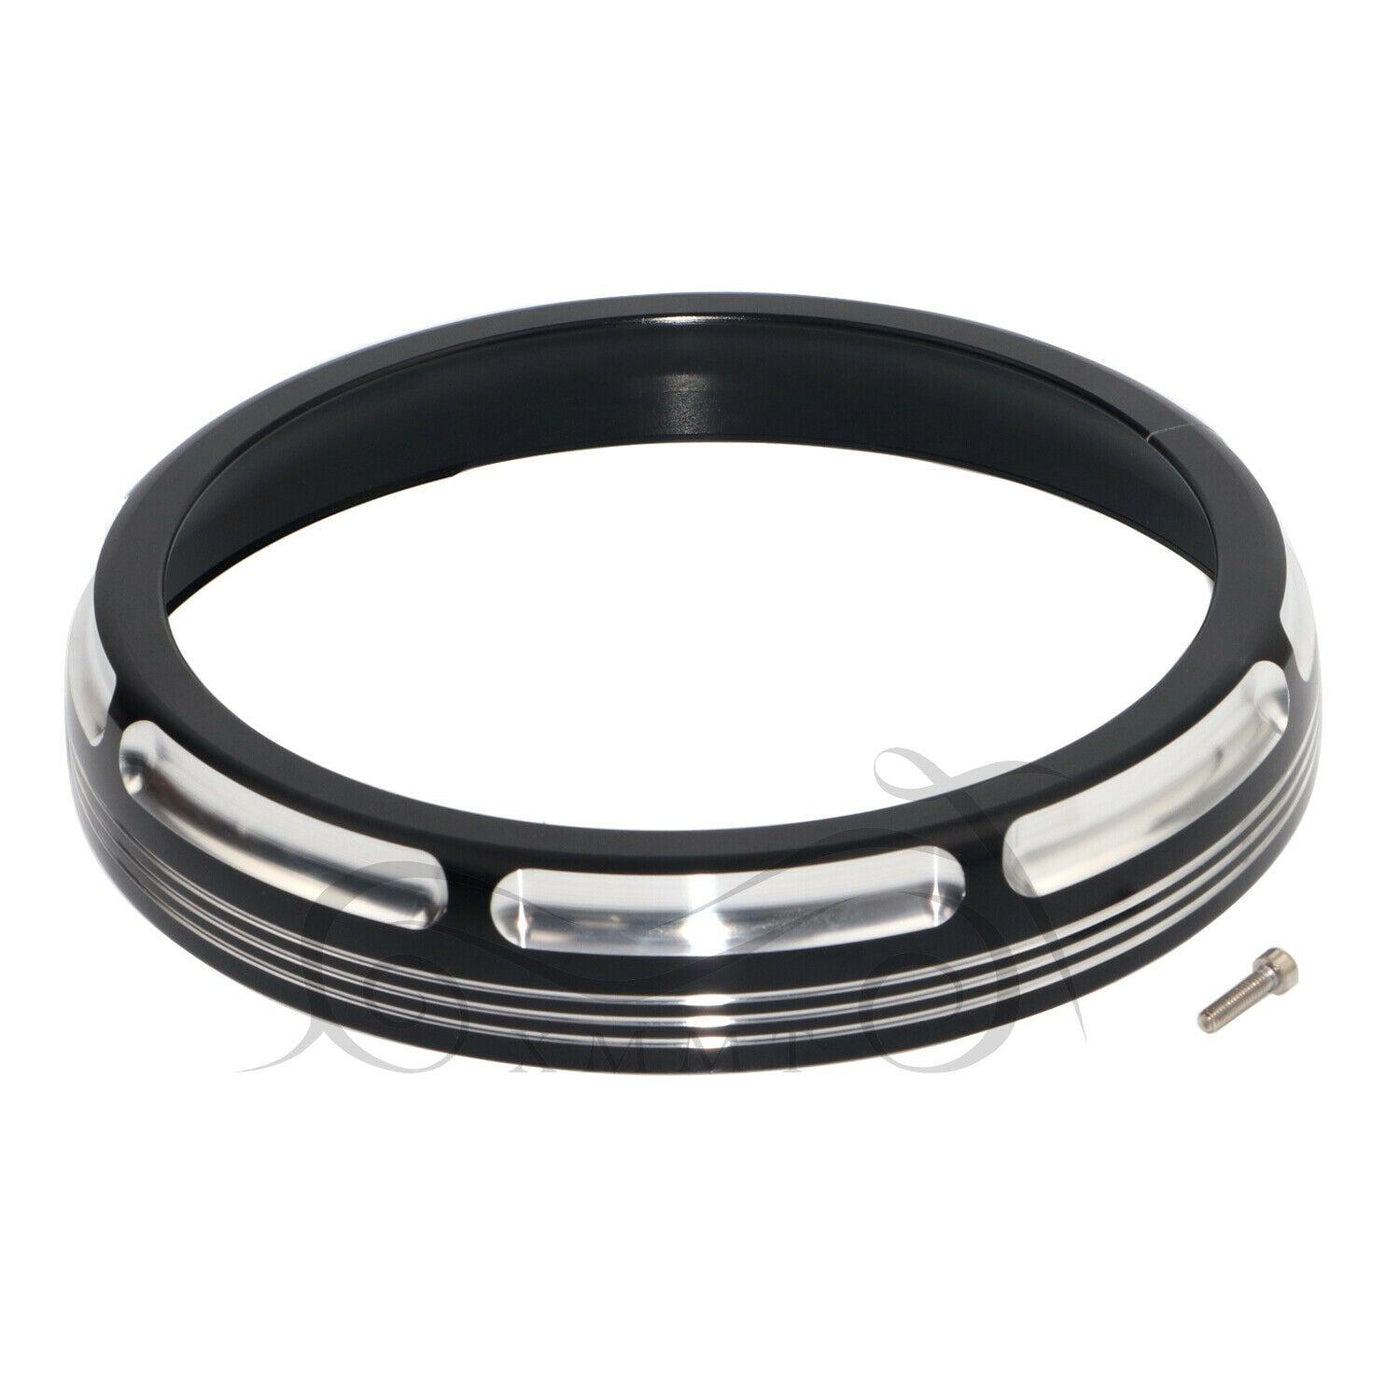 7" Motorcycle CNC Aluminum Headlight Trim Ring For Harley 96-18 FLHTCU FLHR FLHX - Moto Life Products